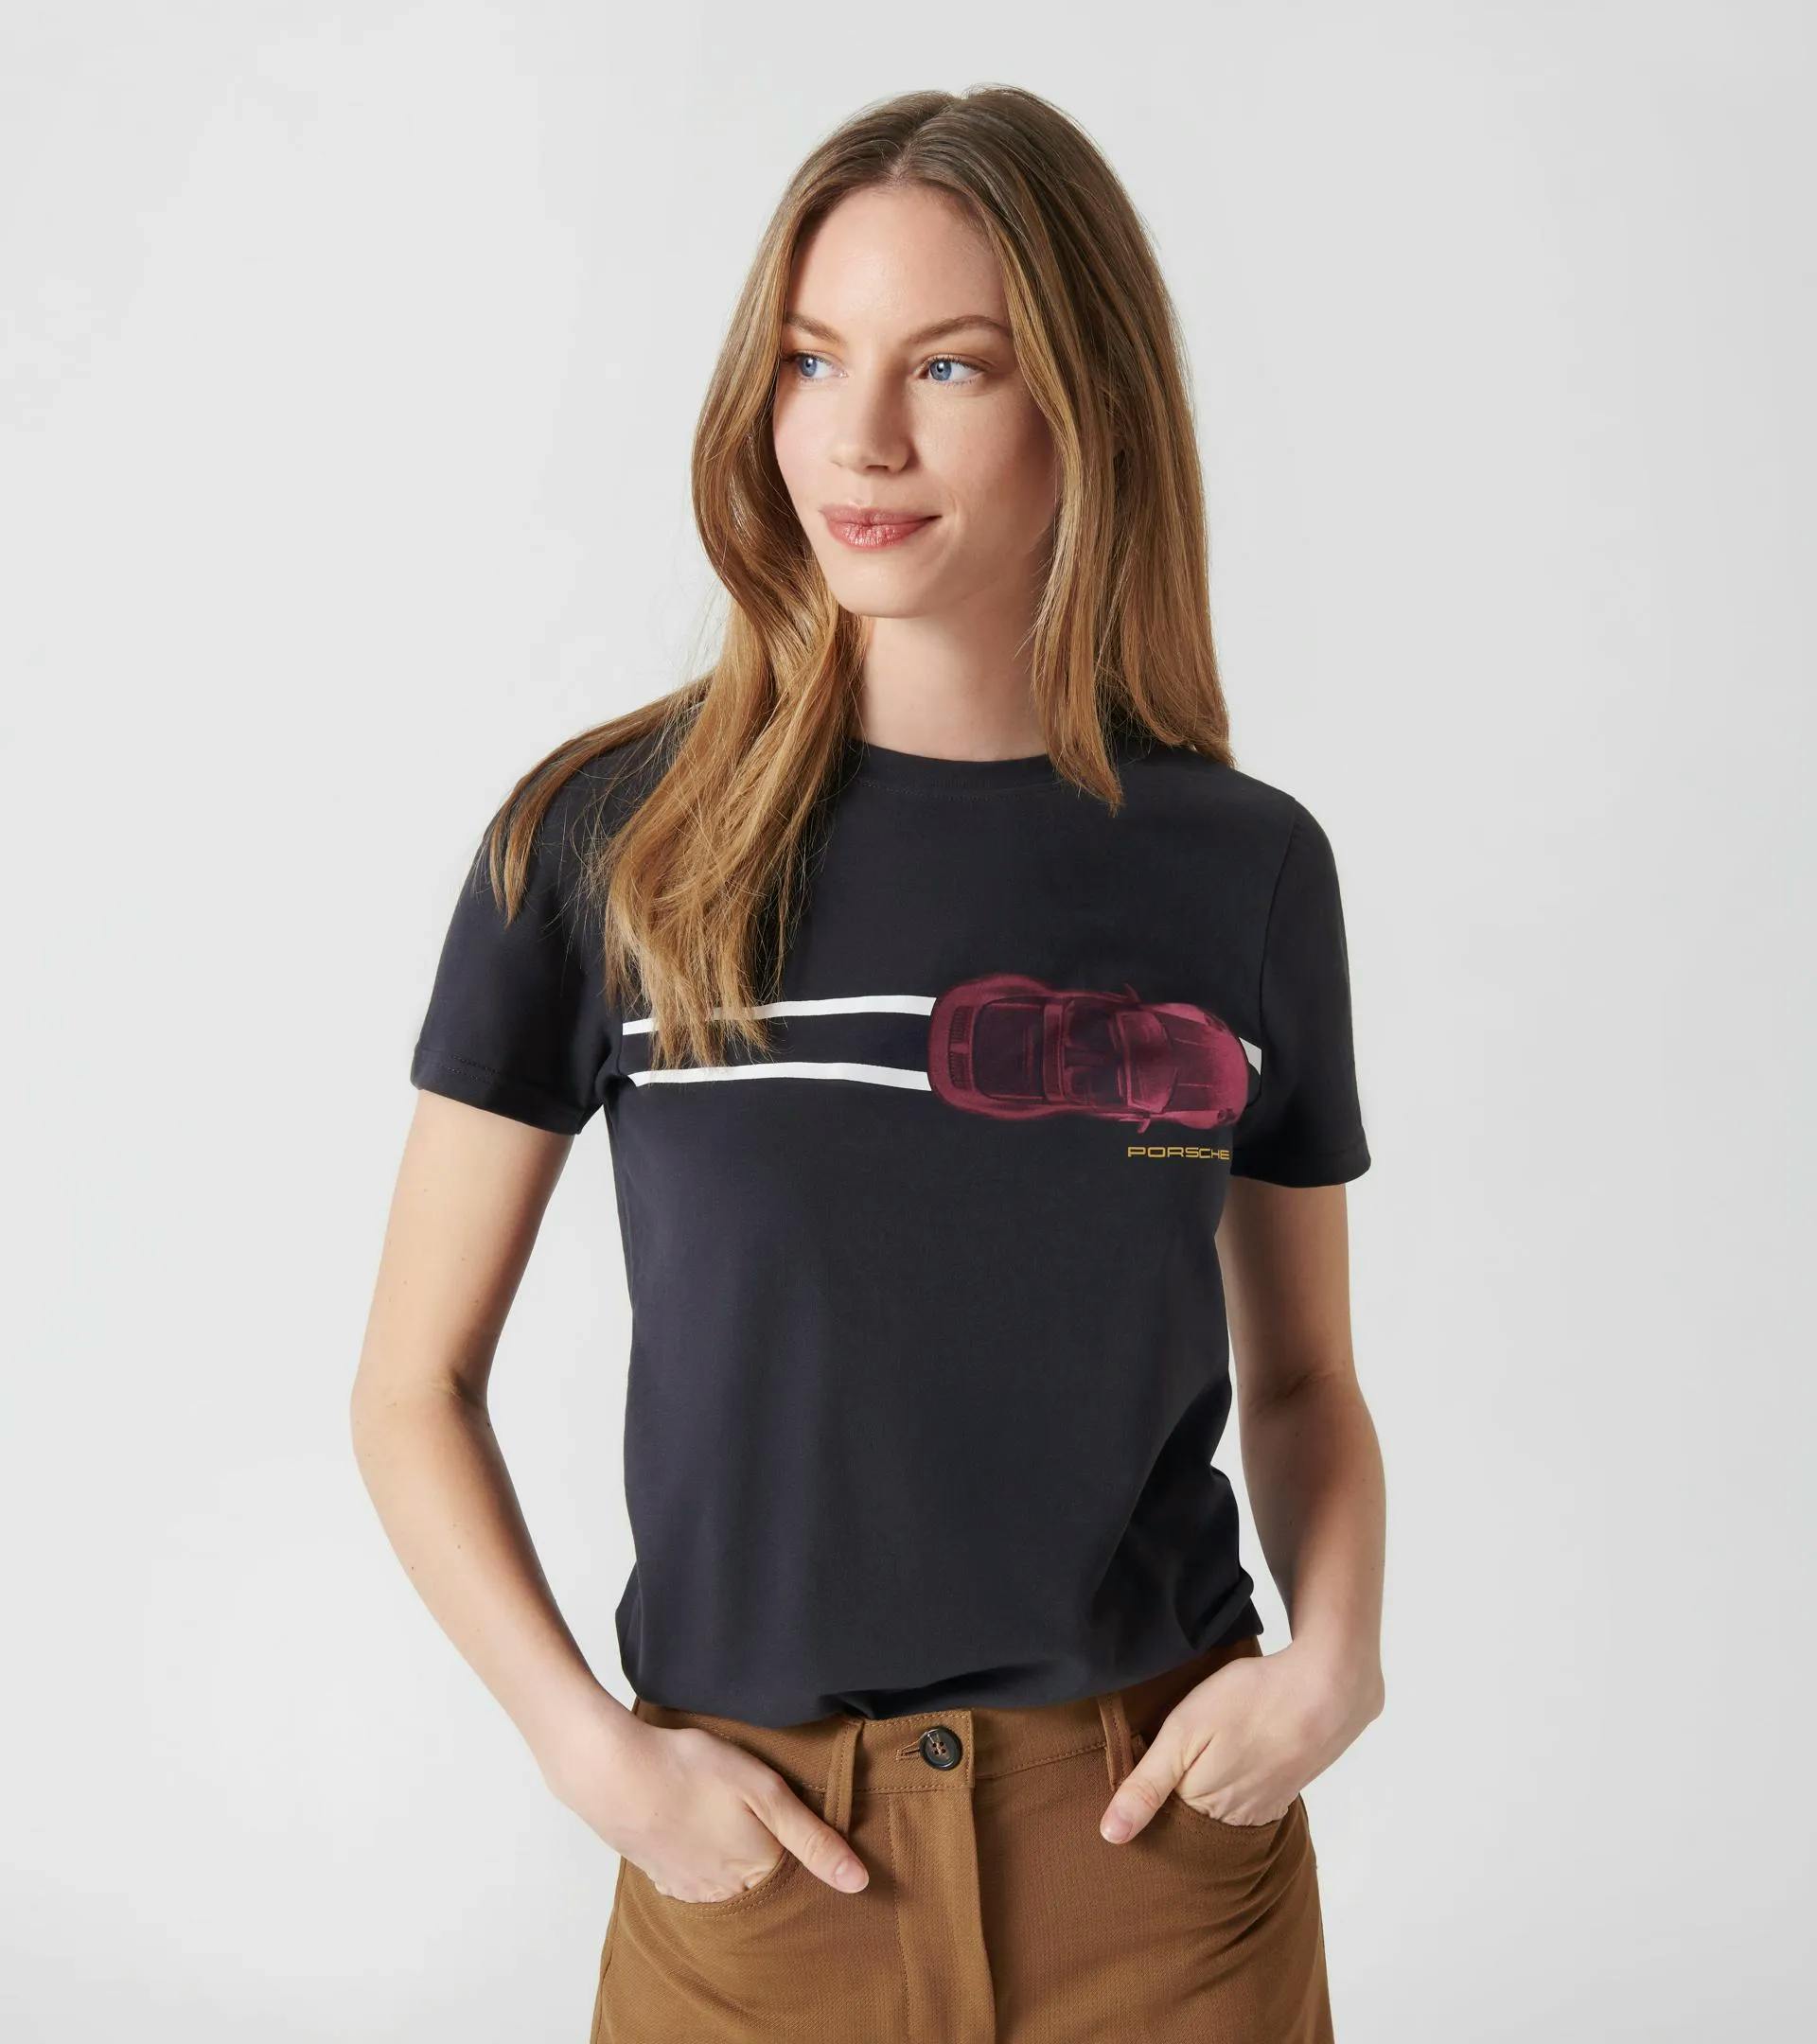 Collector's T-Shirt No. 19 unisex – Heritage – Ltd. 5